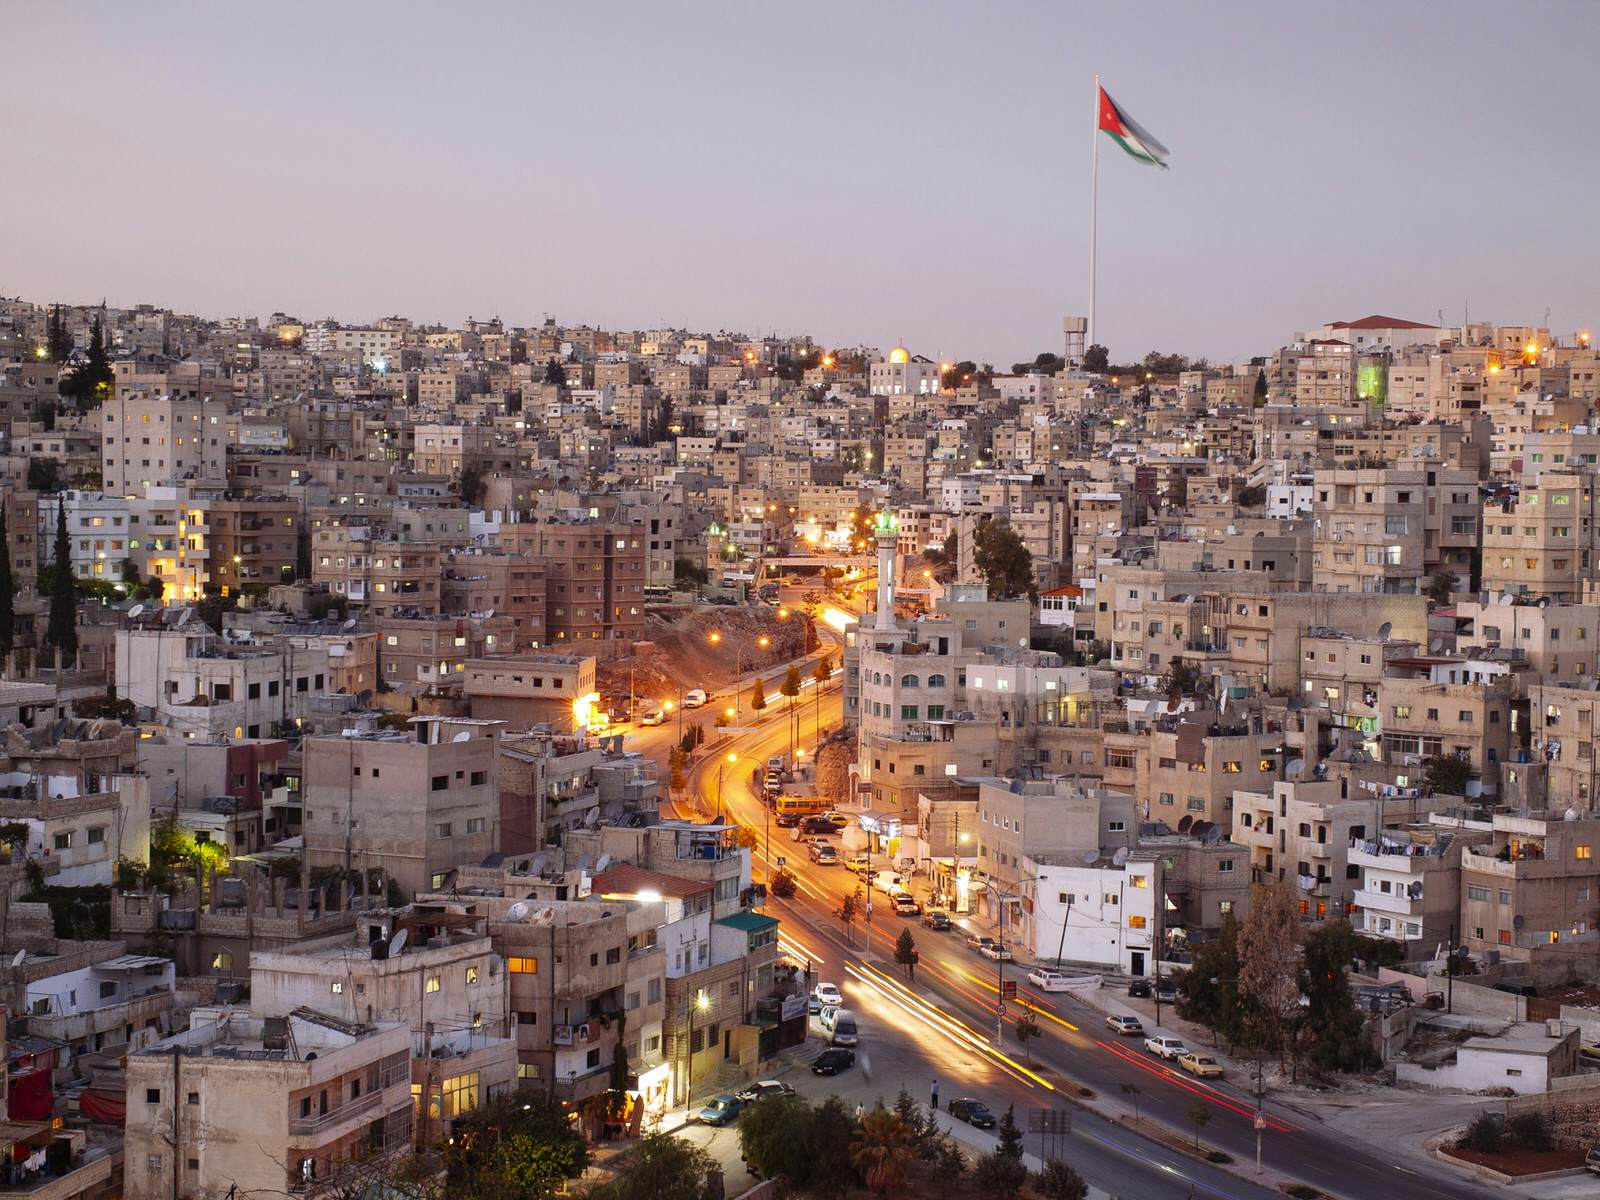 Nysgerrighed i aften Habitat Amman travel | Jordan, Middle East - Lonely Planet